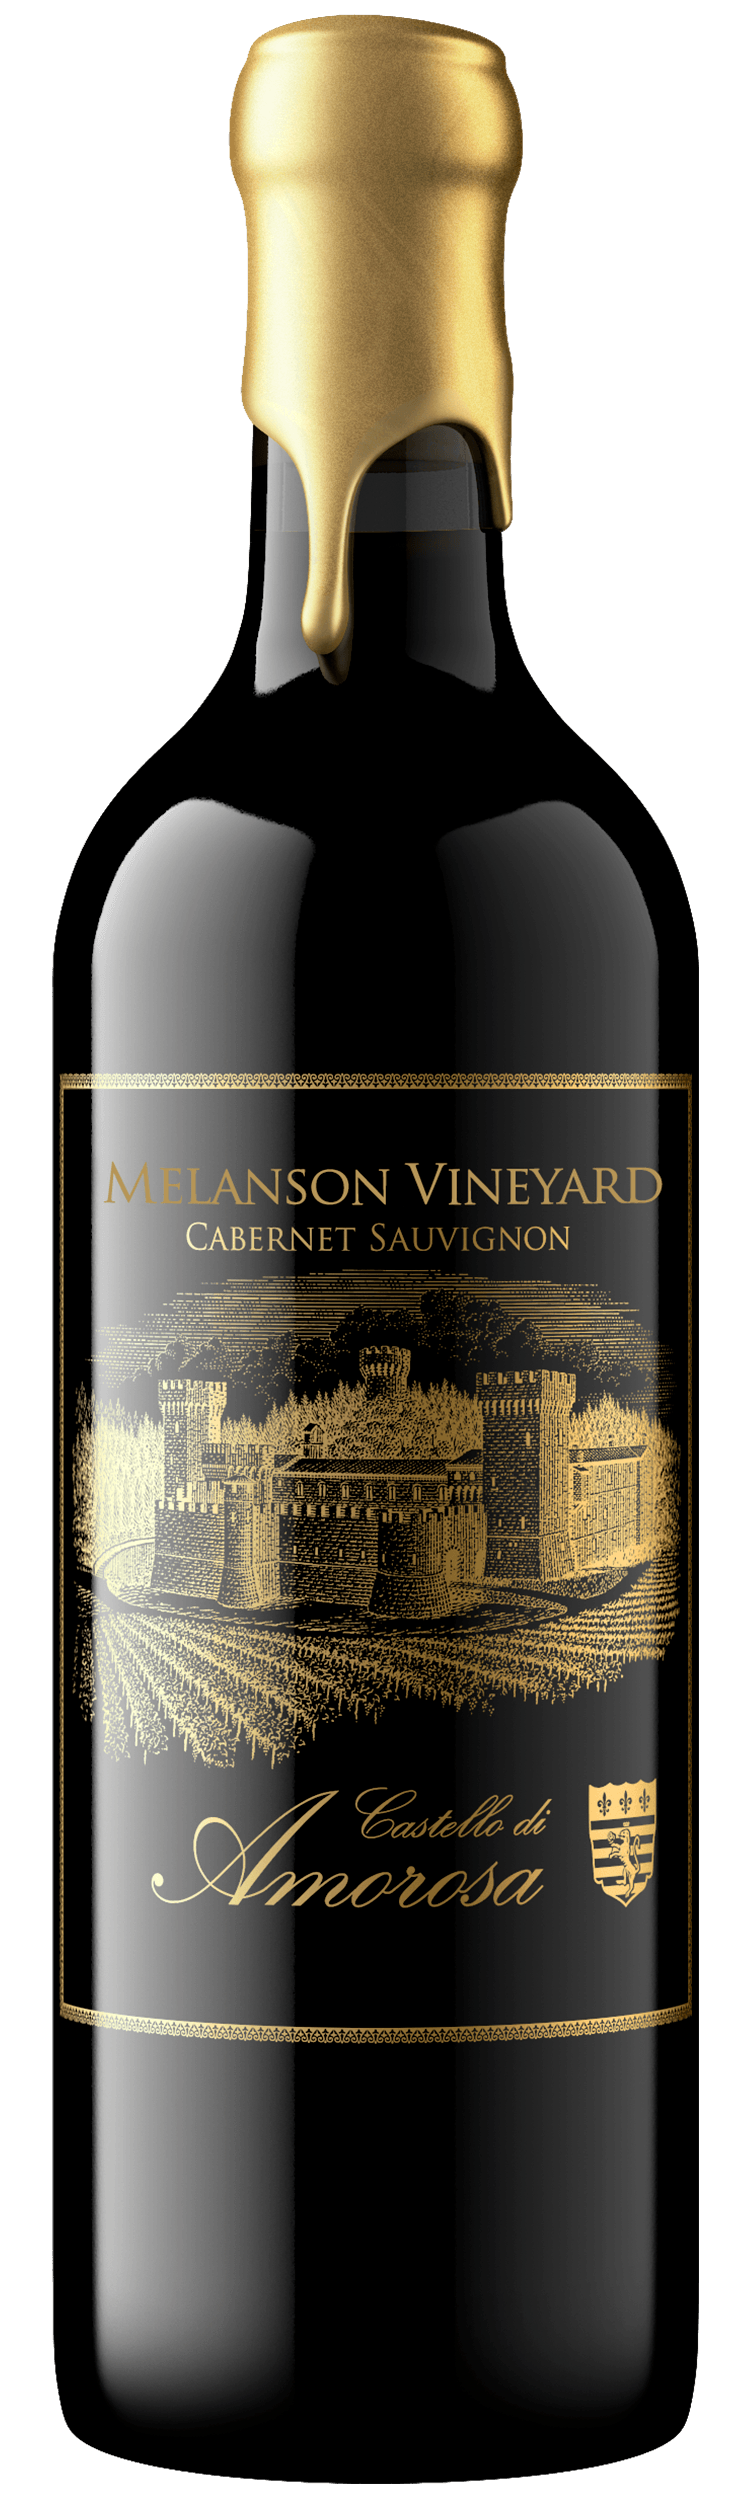 Melanson Vineyard Cabernet Sauvignon